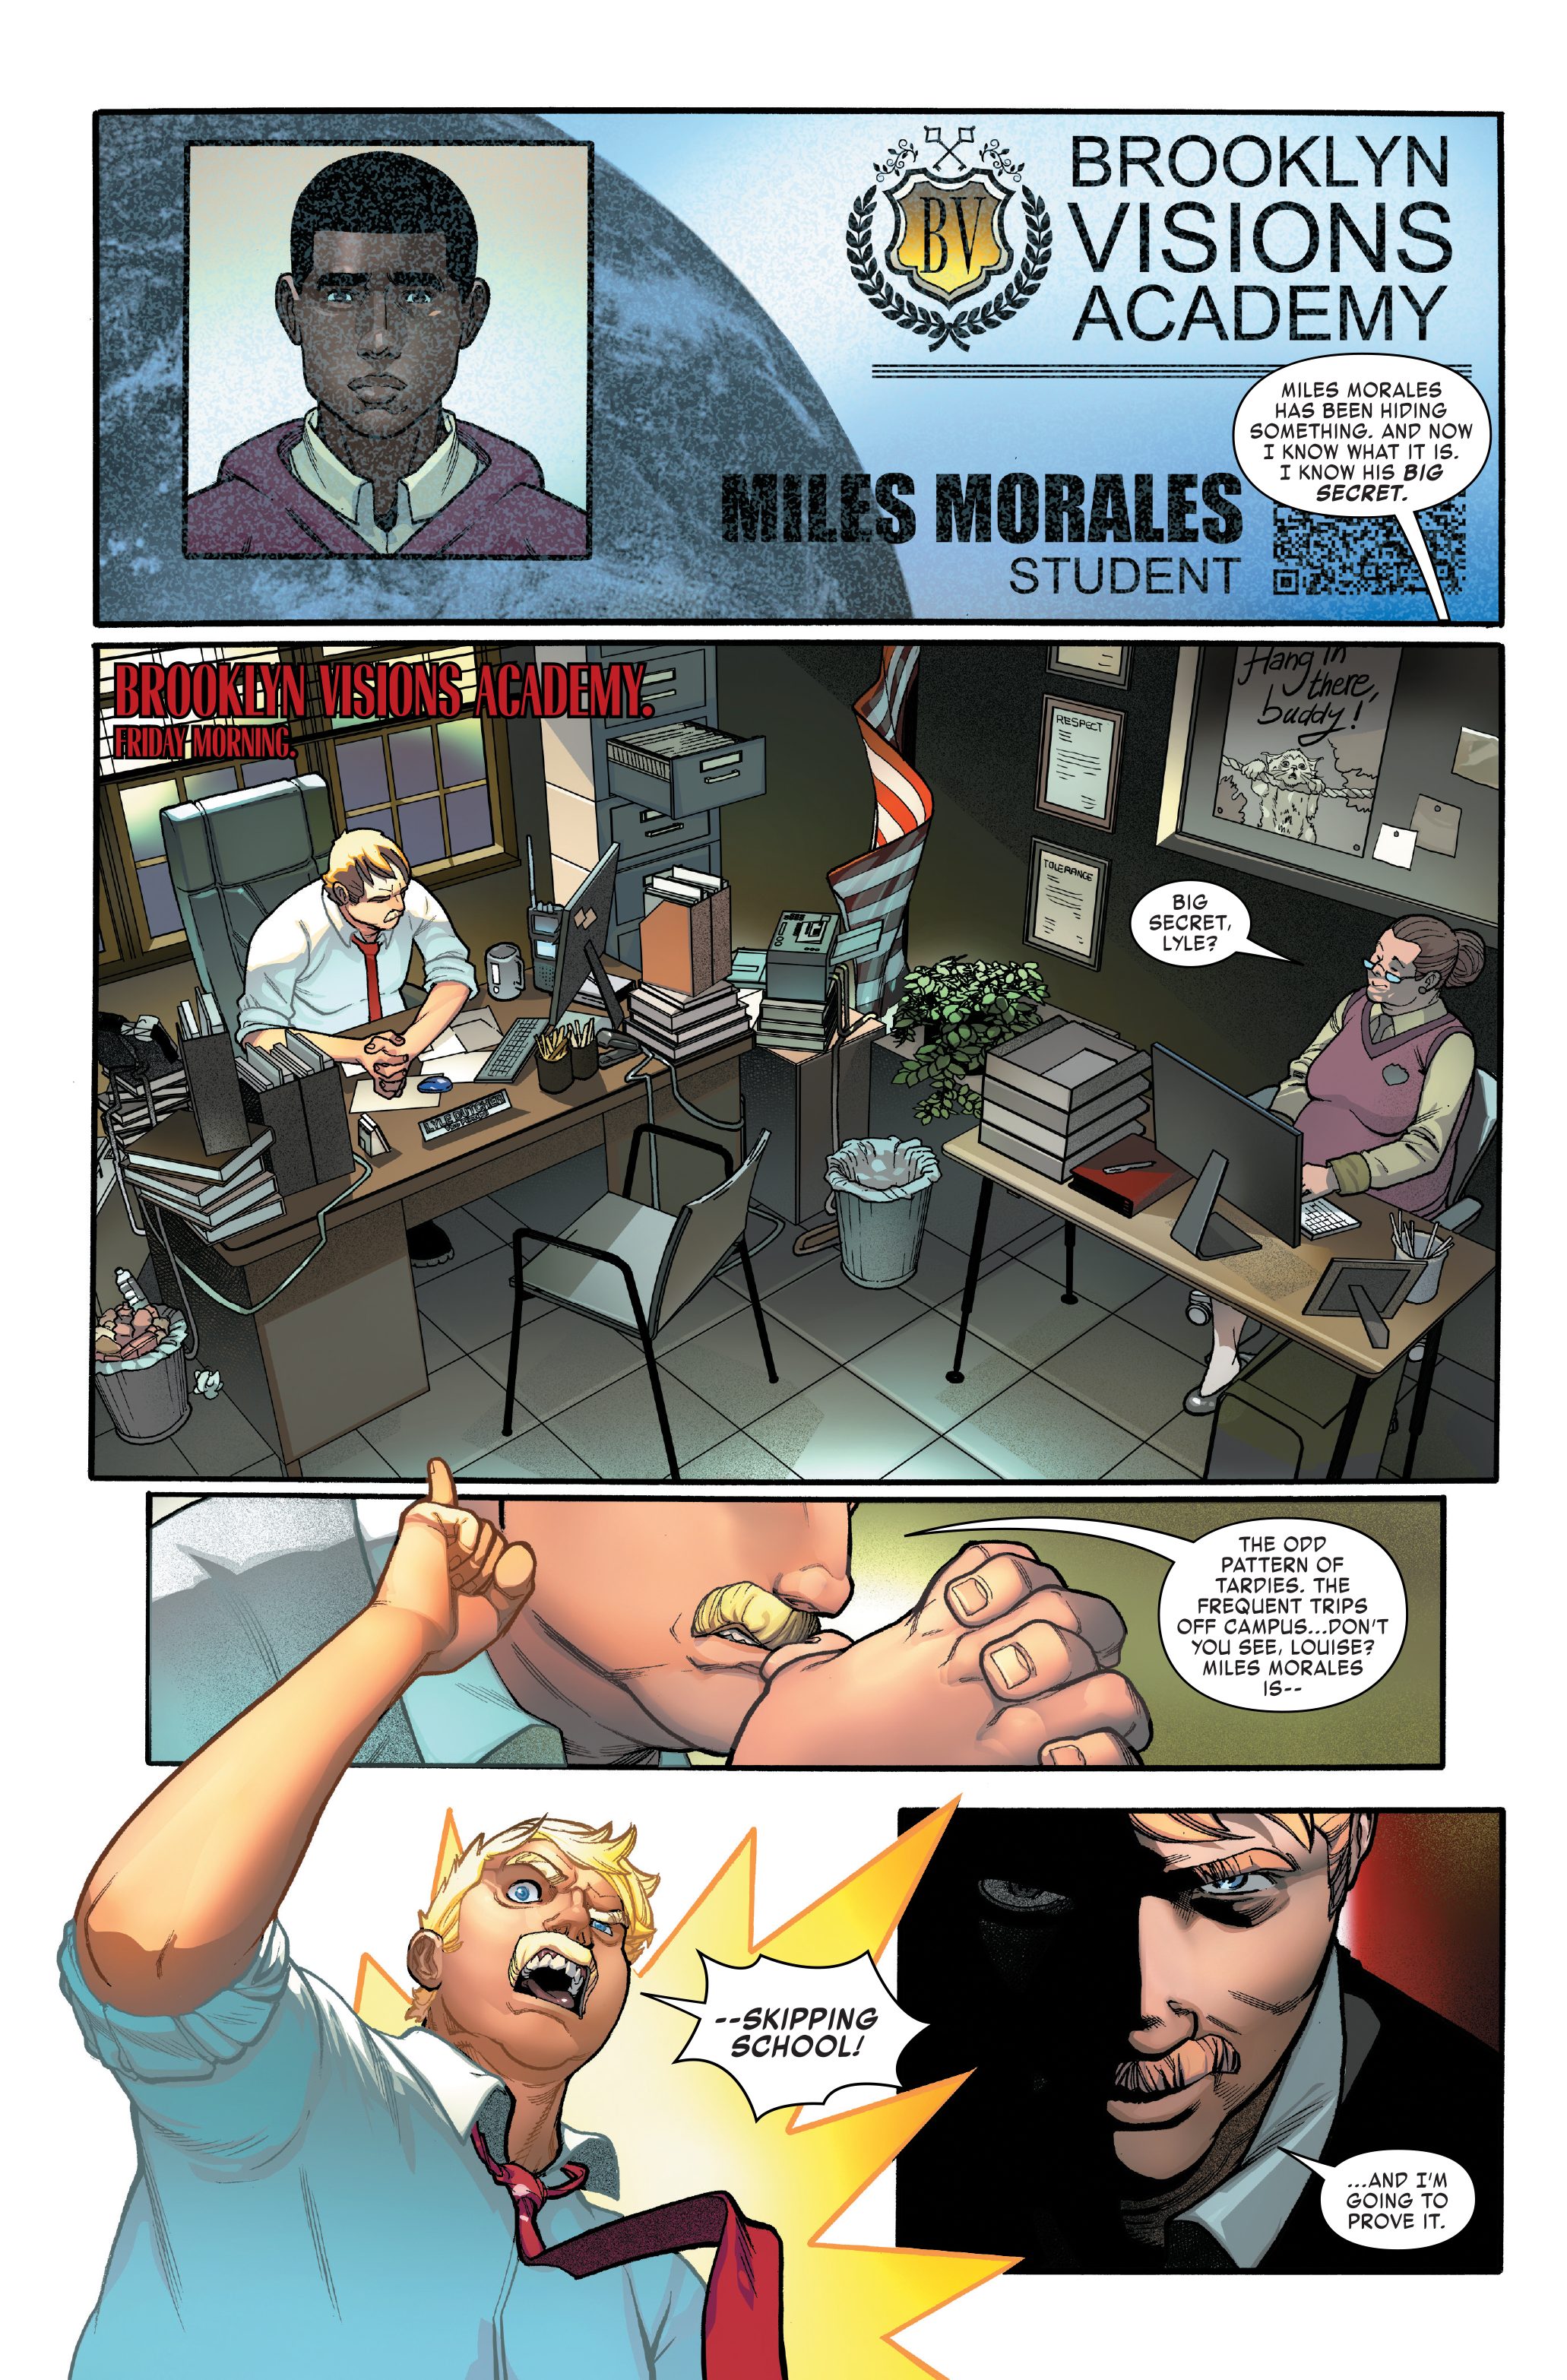 Miles Morales: Spider-Man #4 page 1